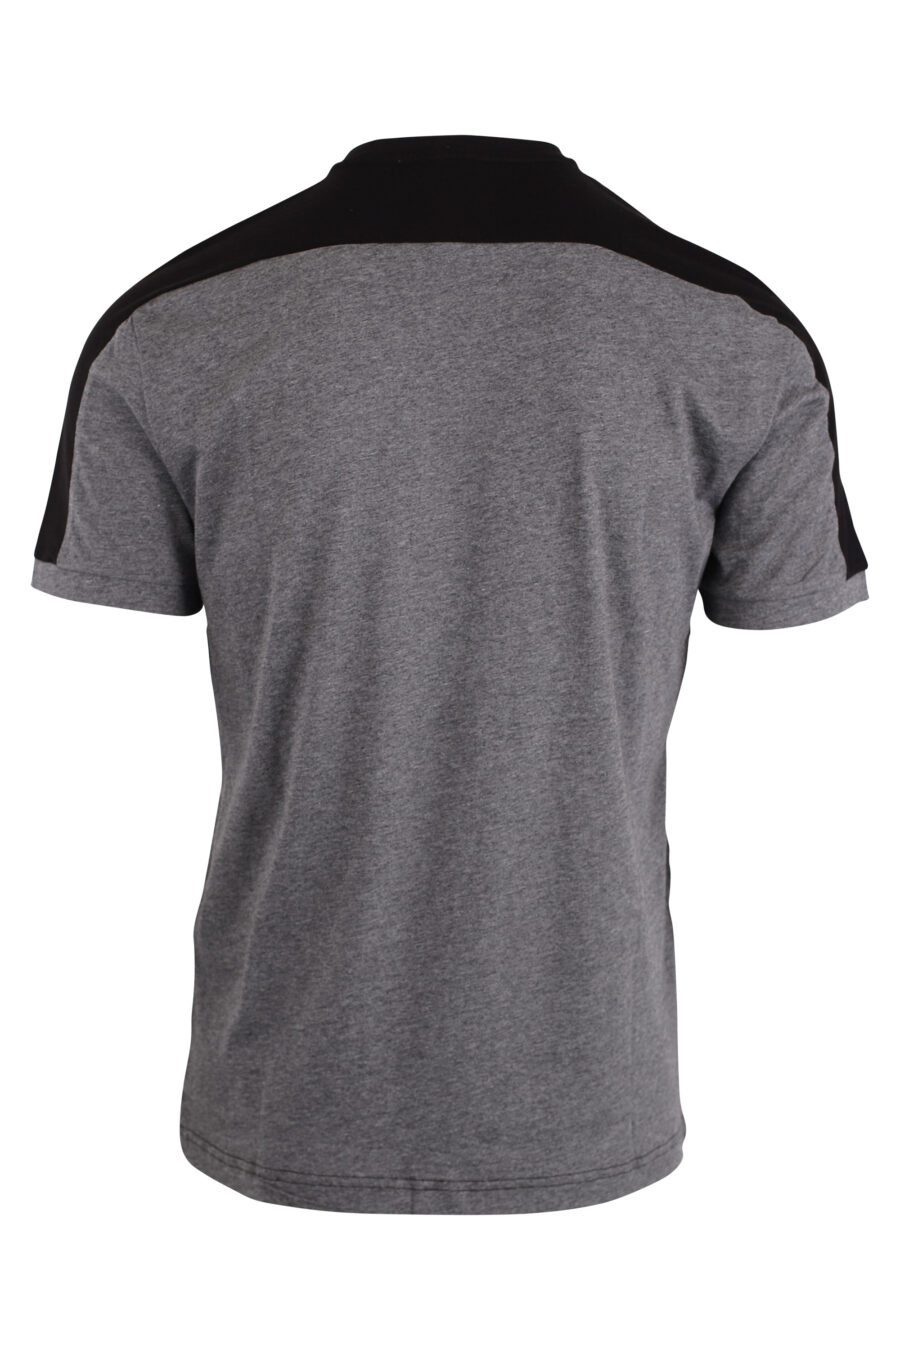 Camiseta negra con gris con logo "lux identity" gris - IMG 4229